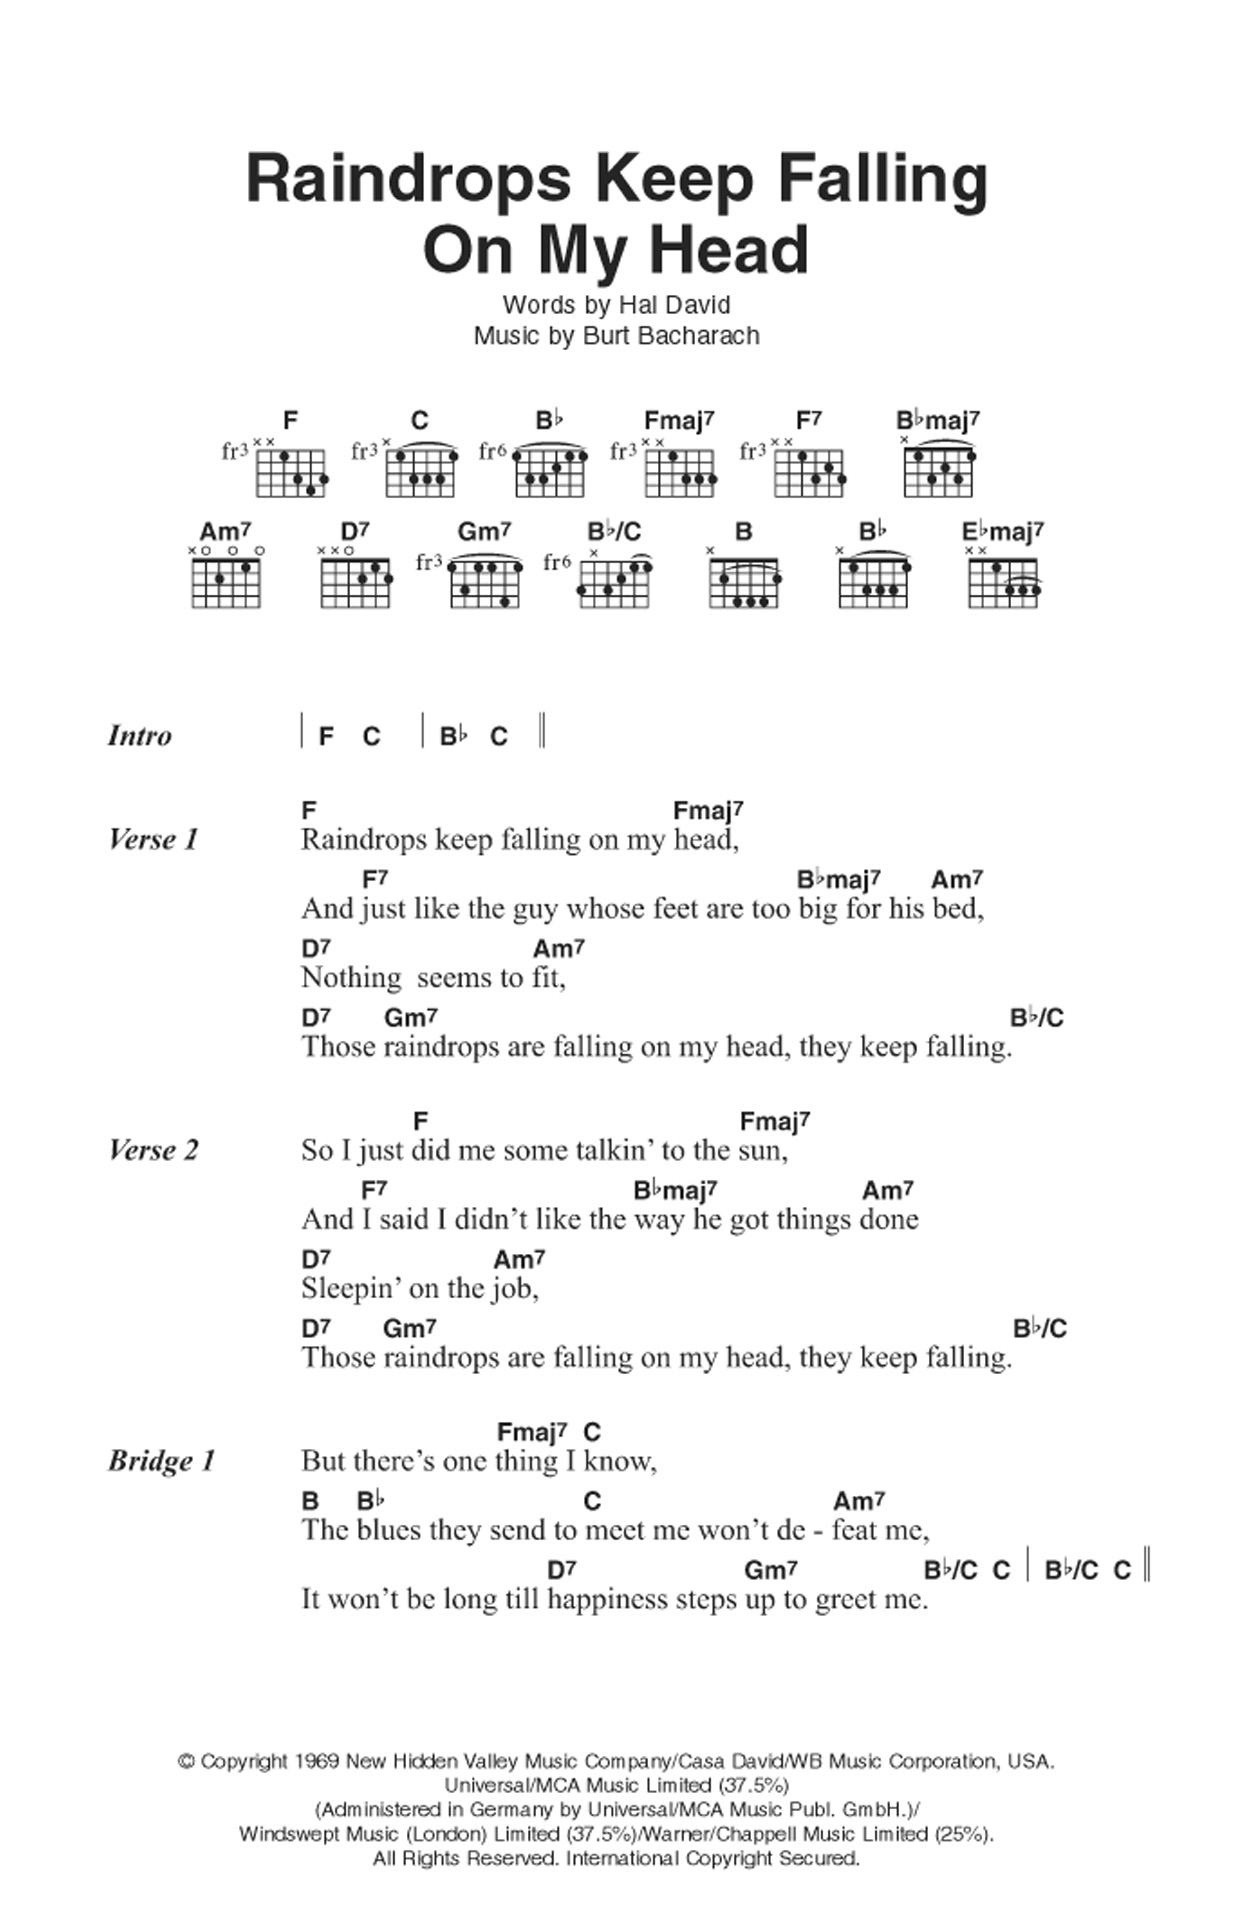 Burt Bacharach Raindrops Keep Falling On My Head Sheet Music Notes & Chords for Guitar Chords/Lyrics - Download or Print PDF